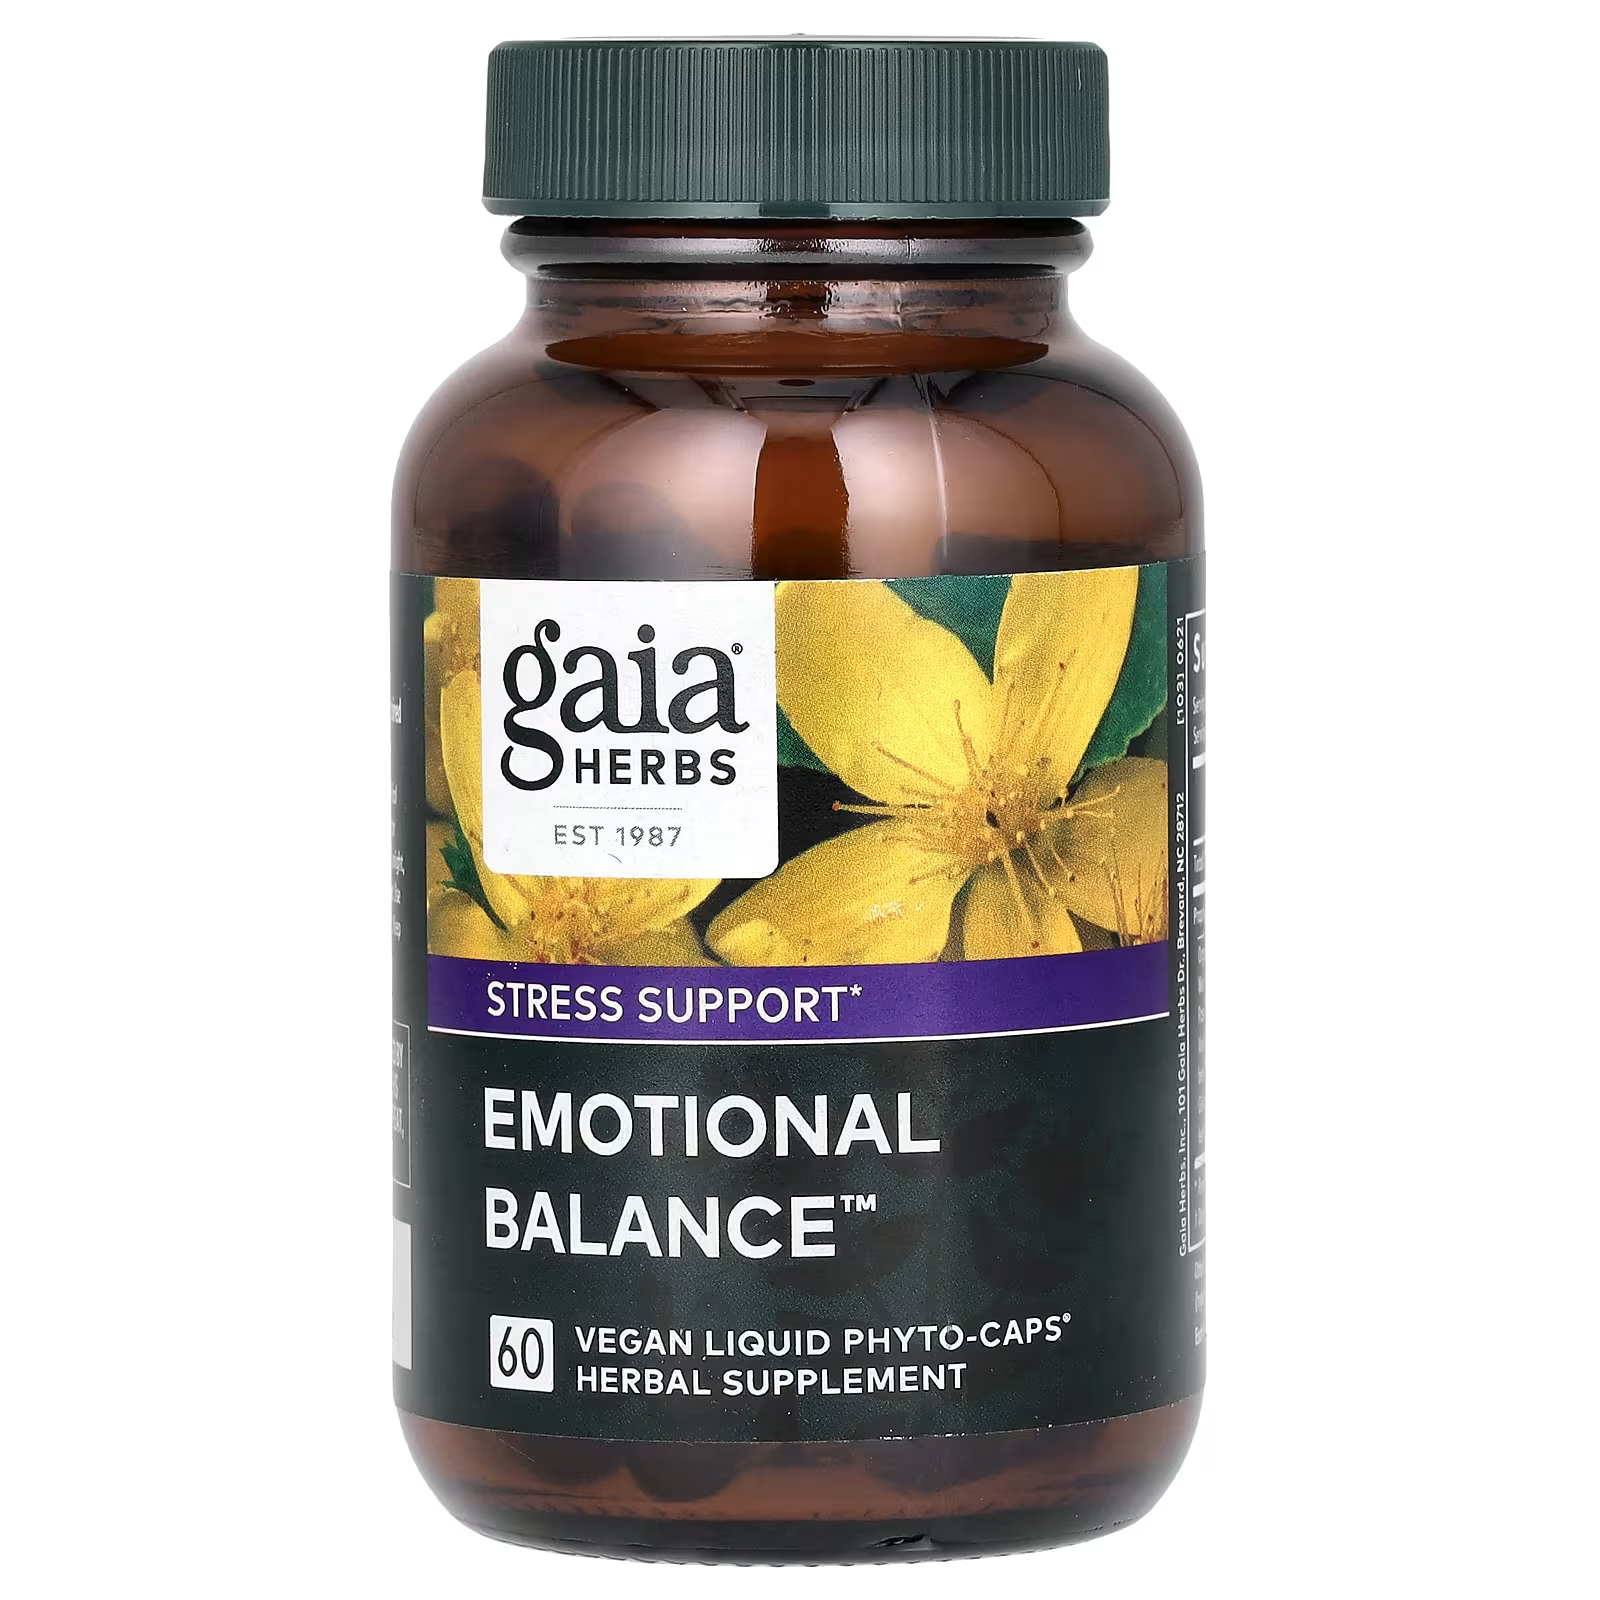 цена Травяная добавка Gaia Herbs Emotional Balance, 60 жидких фитокапсул